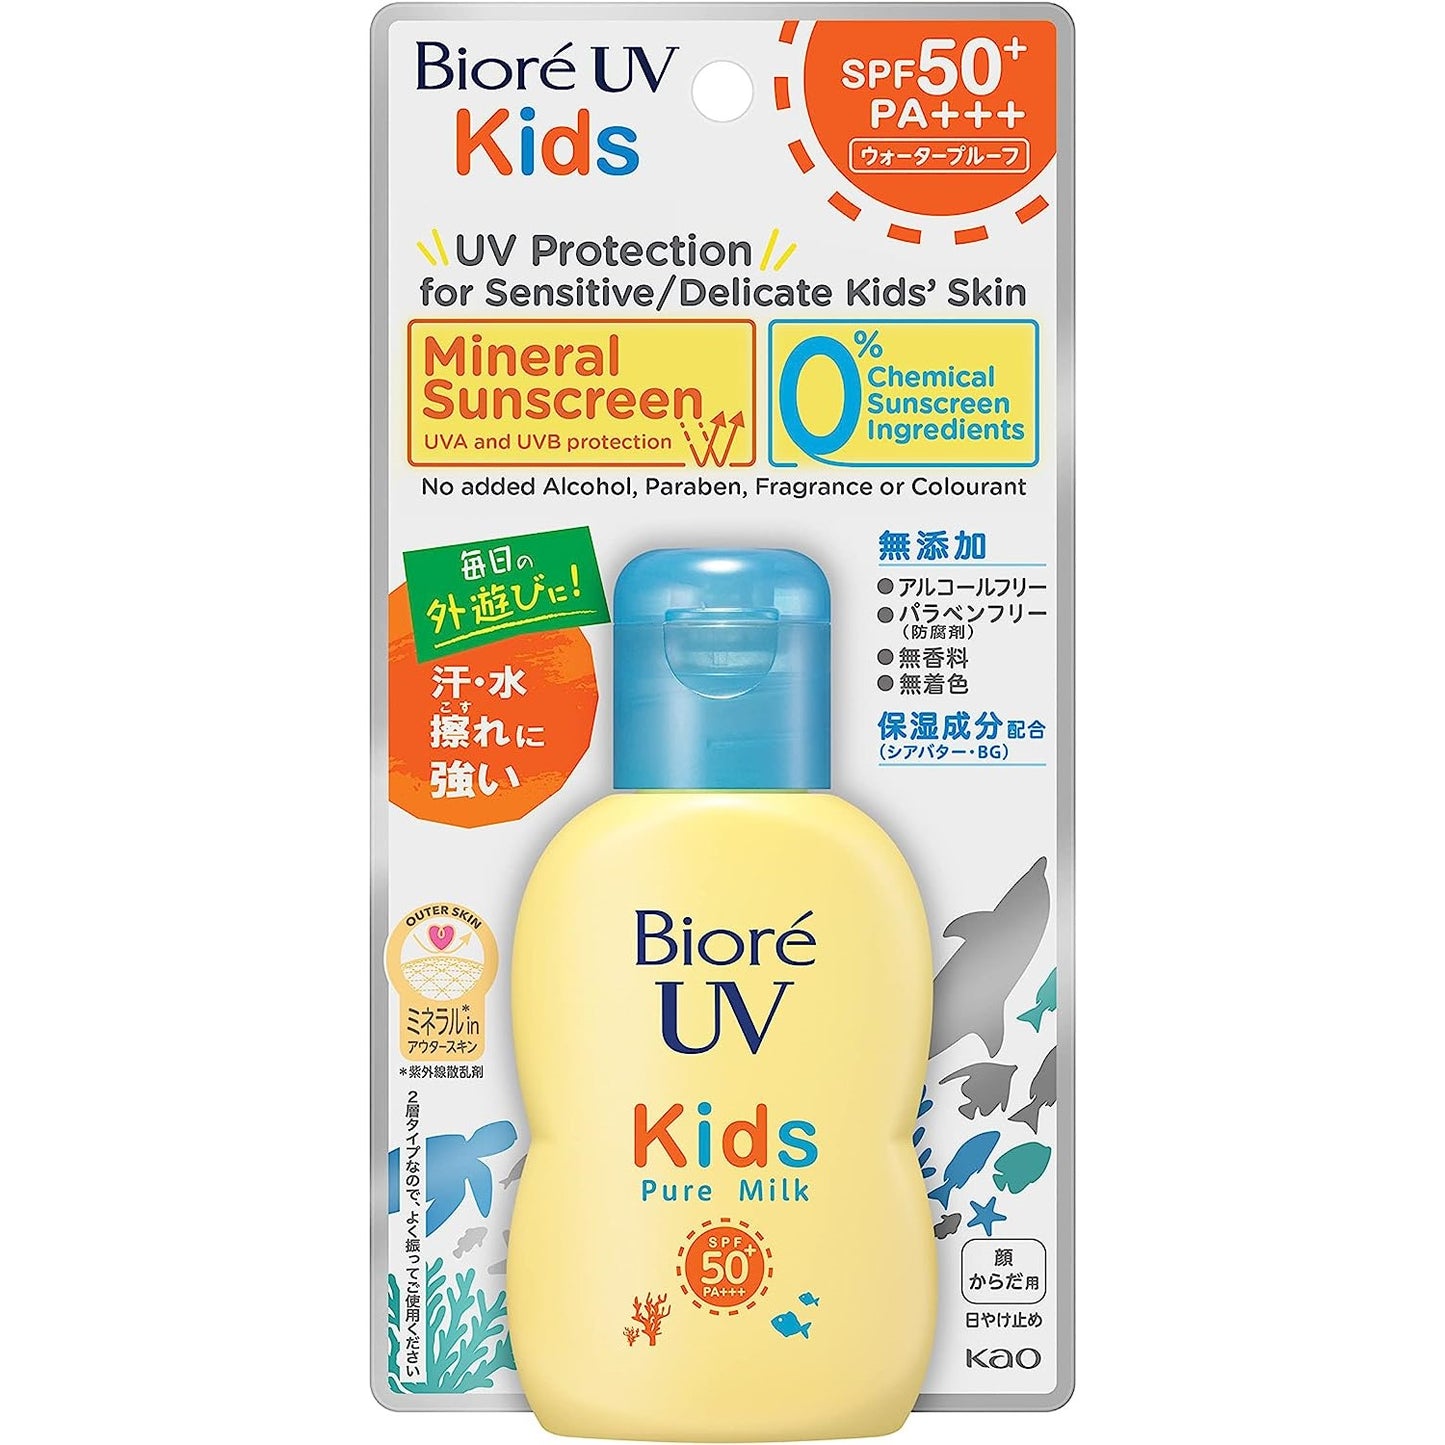 Biore Sarasara Kid’s UV Pure Milk Sunscreen 70ml SPF50+ PA+++ (Made in Japan)